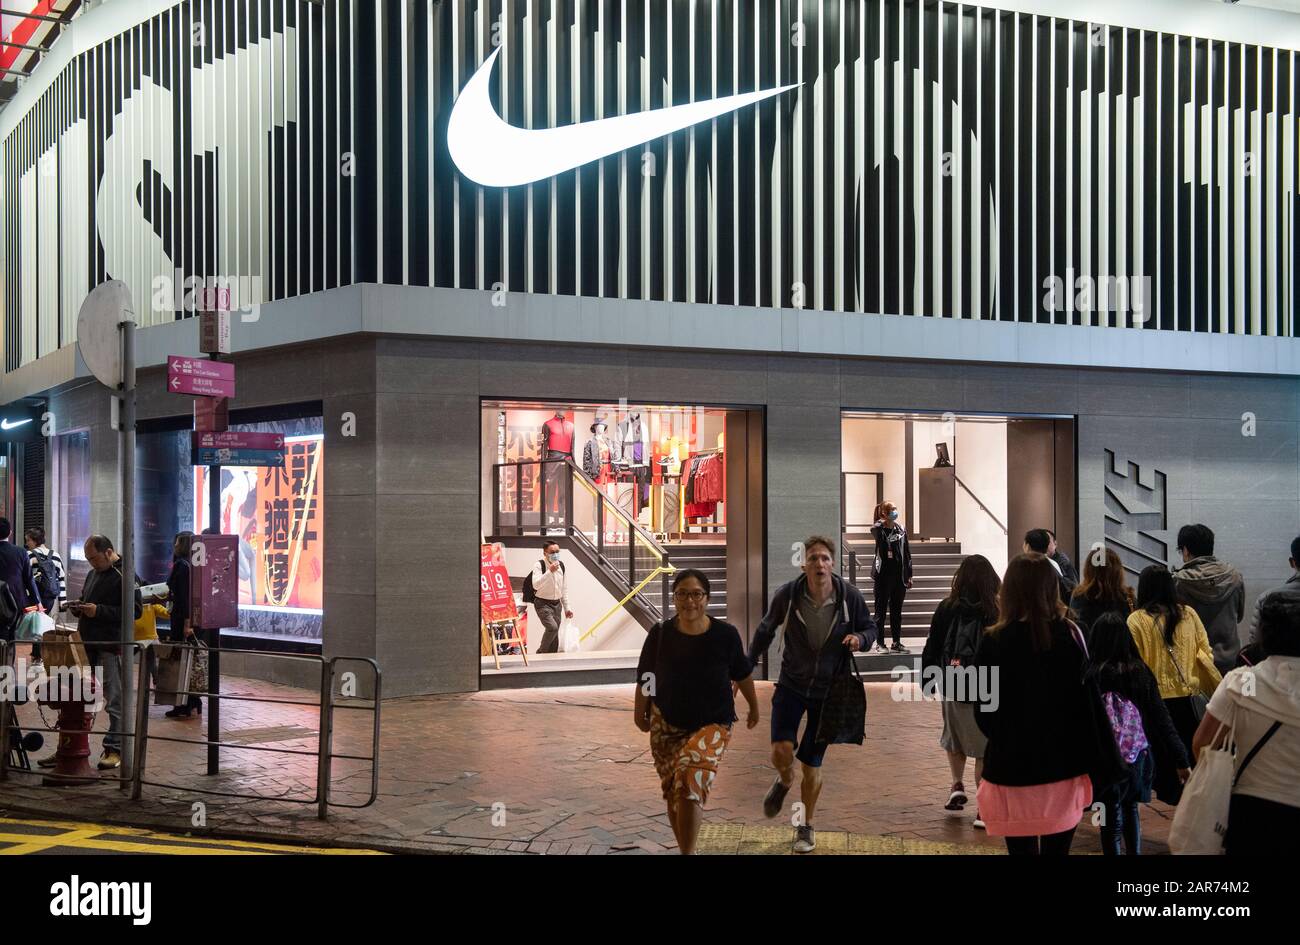 Multinacional americana marca de ropa deportiva Nike Store. en Hong Kong Fotografía de stock - Alamy